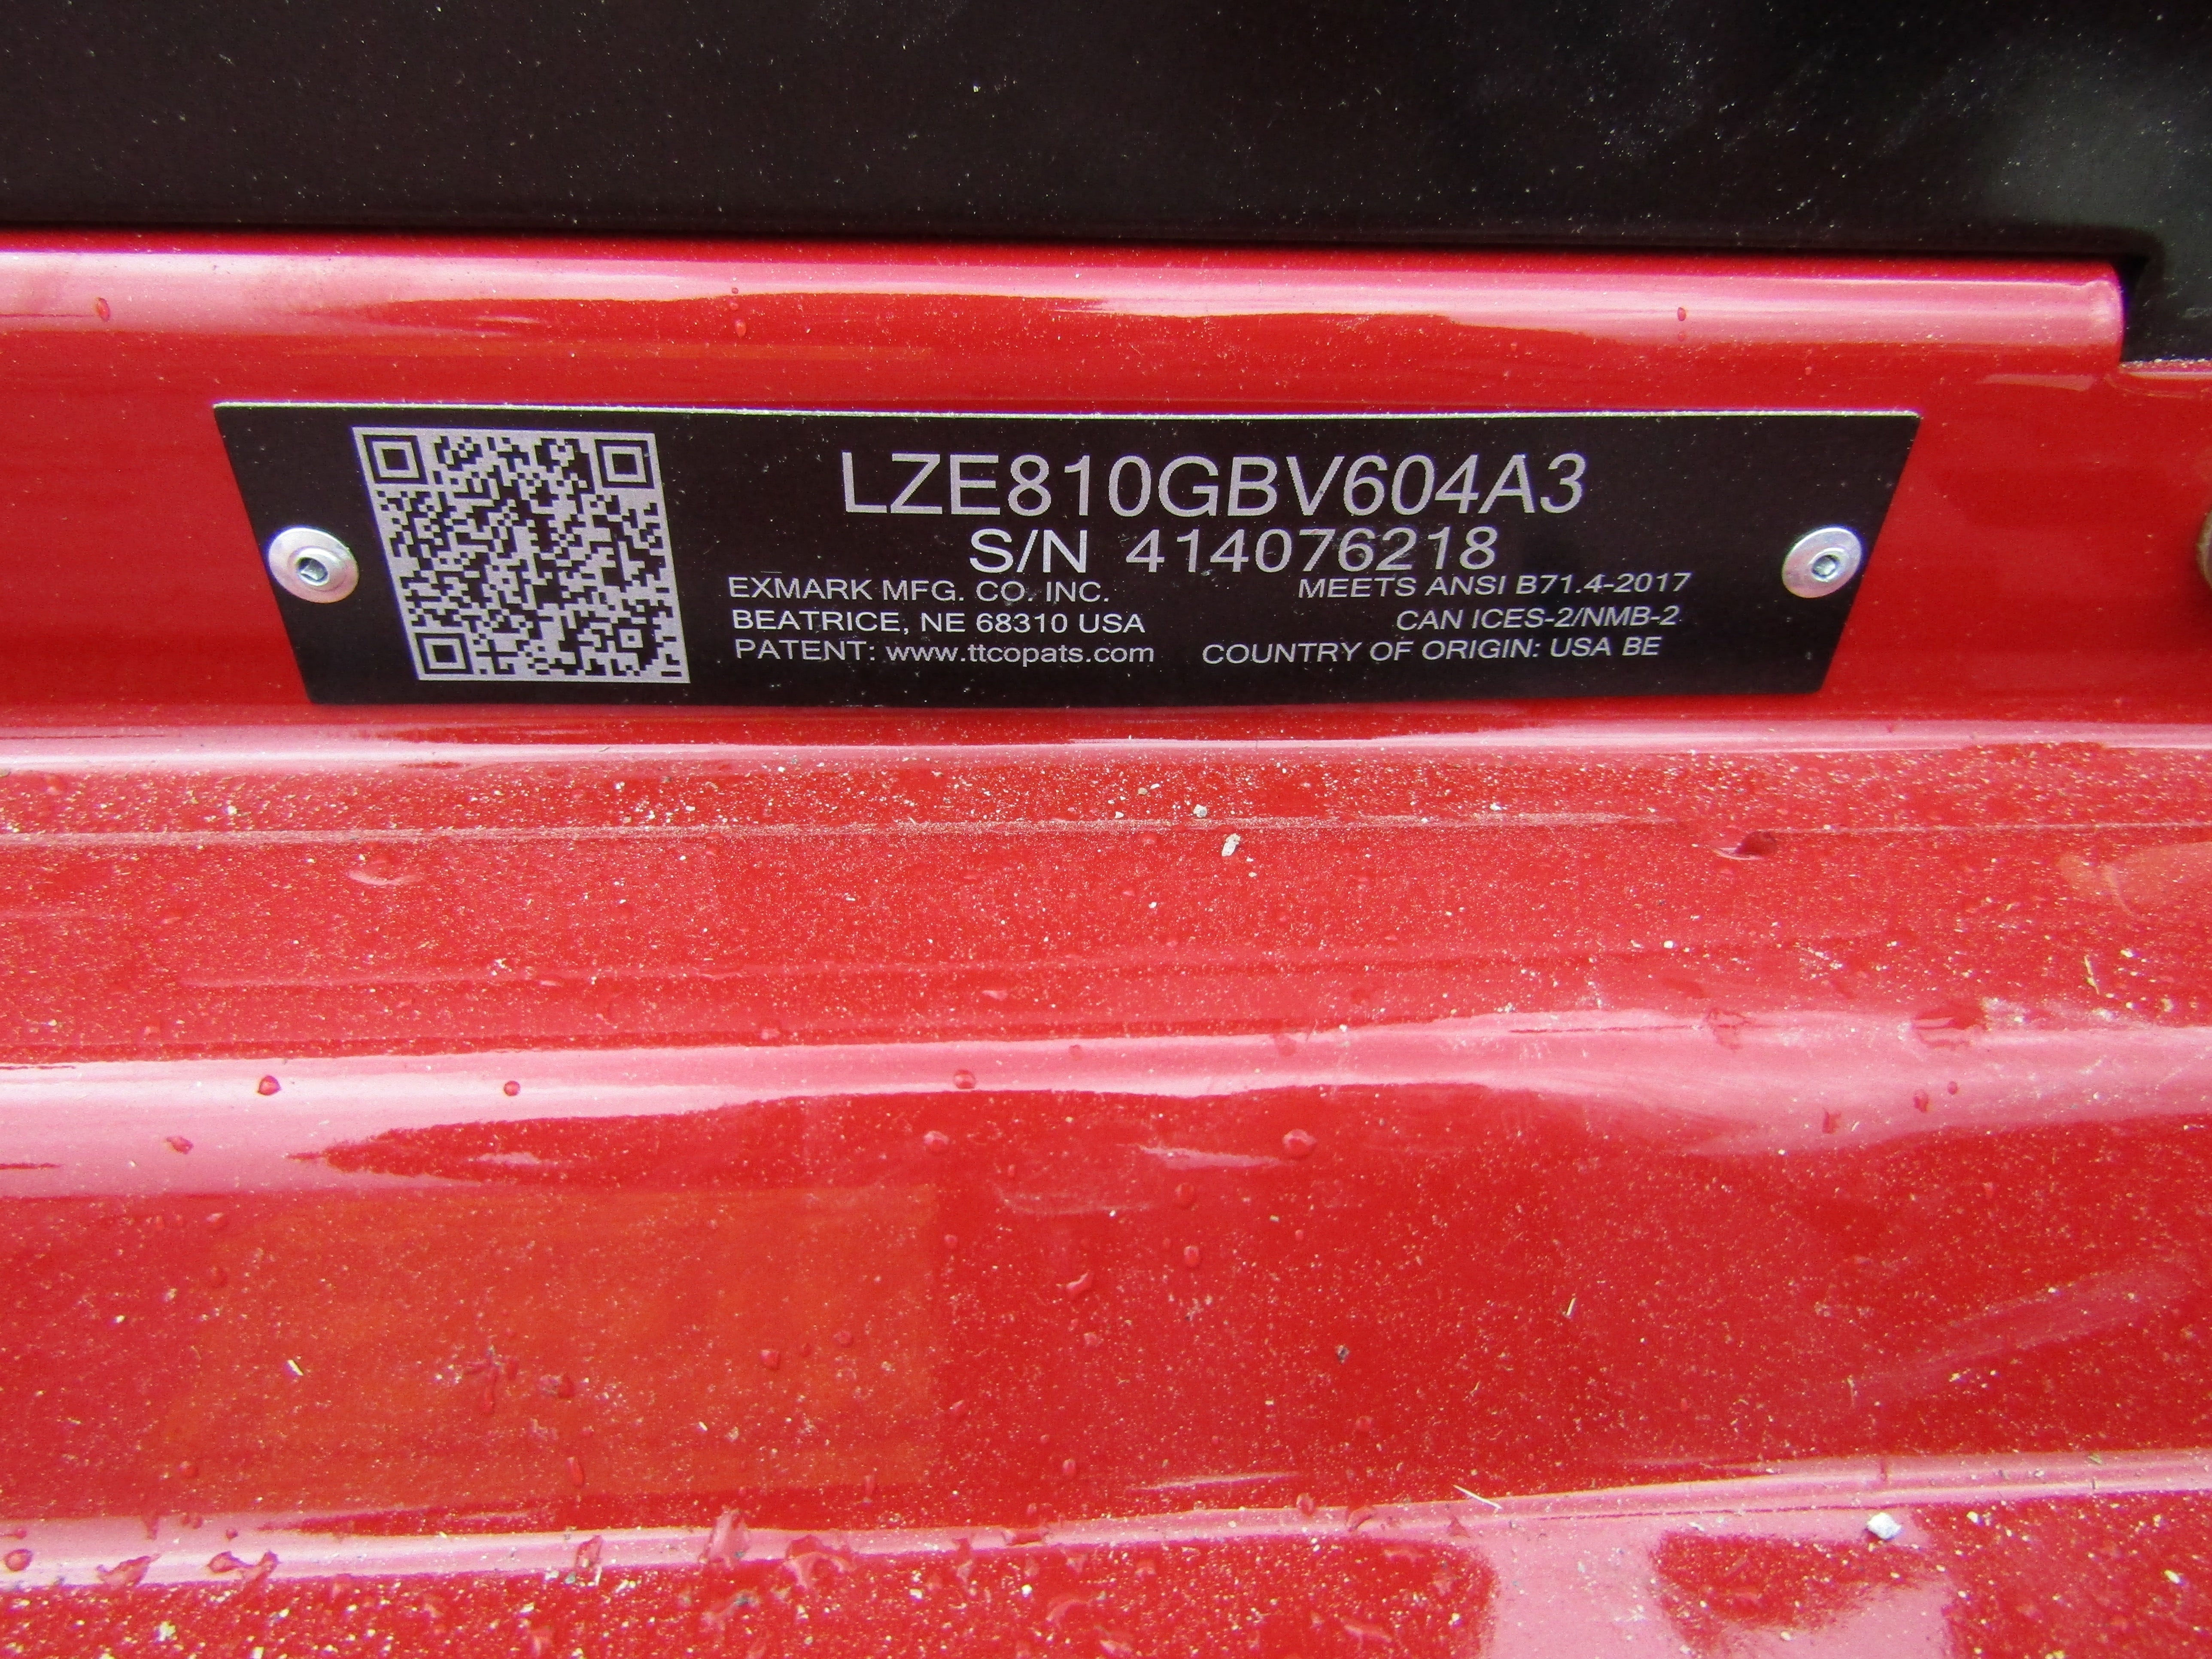 EXM-8 60" EXMARK LAZER E-SERIES LZE810GBV604A3 ZERO TURN